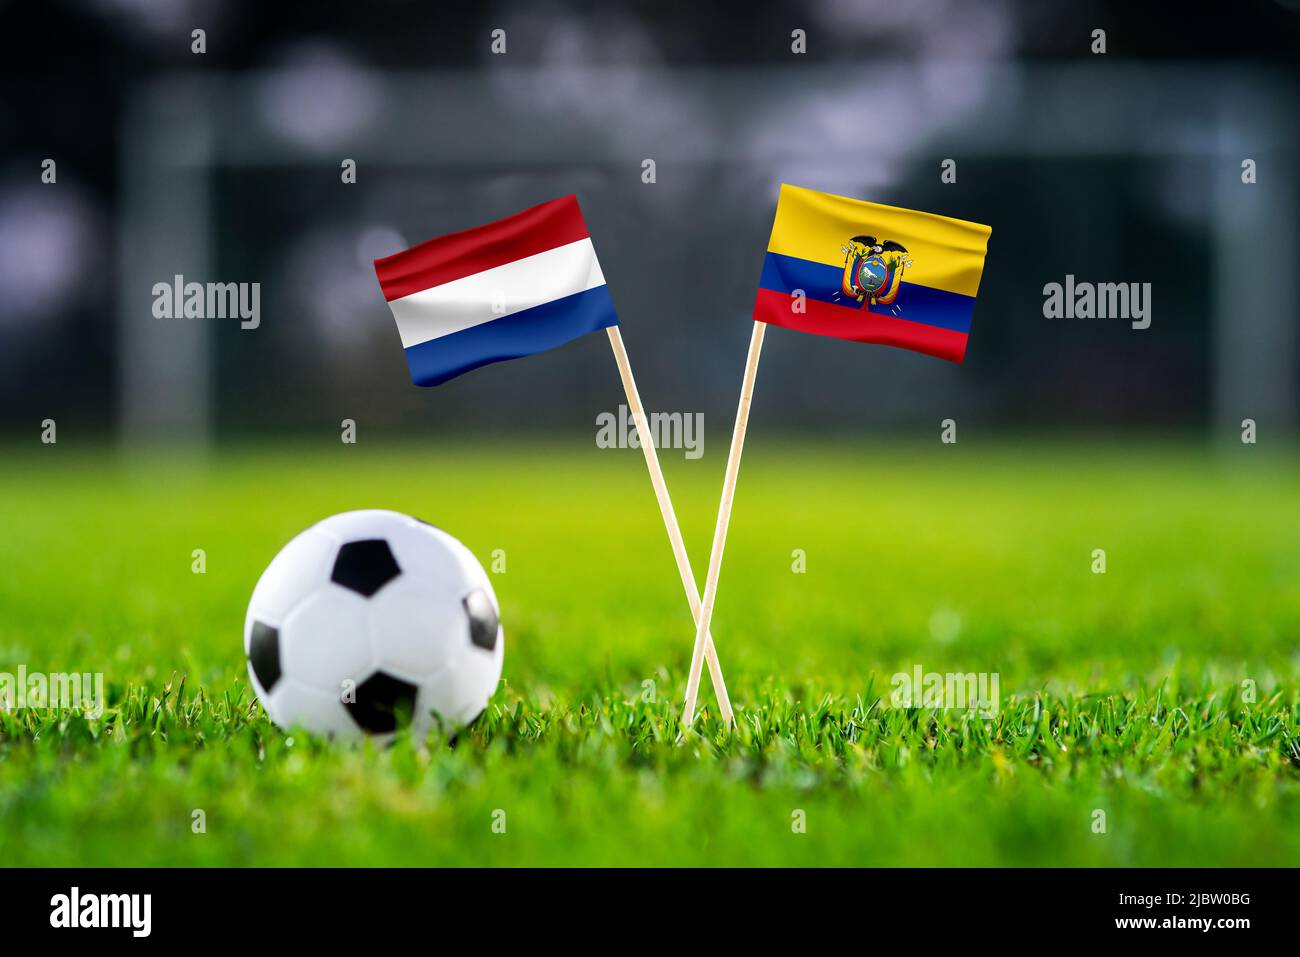 Netherlands vs. Ecuador, Khalifa Stadium, Football match wallpaper, Handmade national flags and soccer ball on green grass. Football stadium in backgr Stock Photo